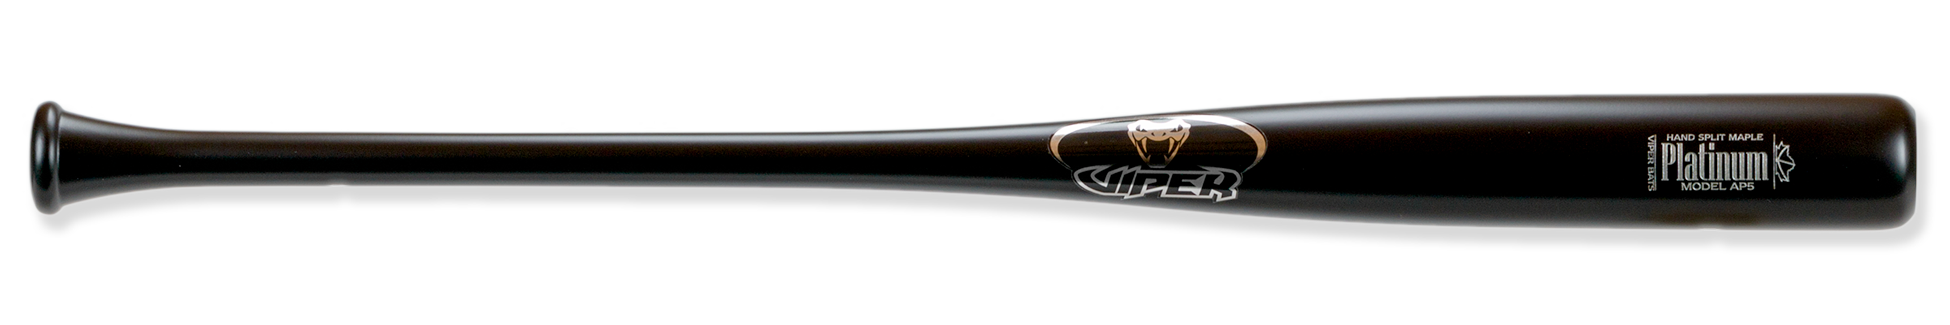 platinum ap5 wood bat